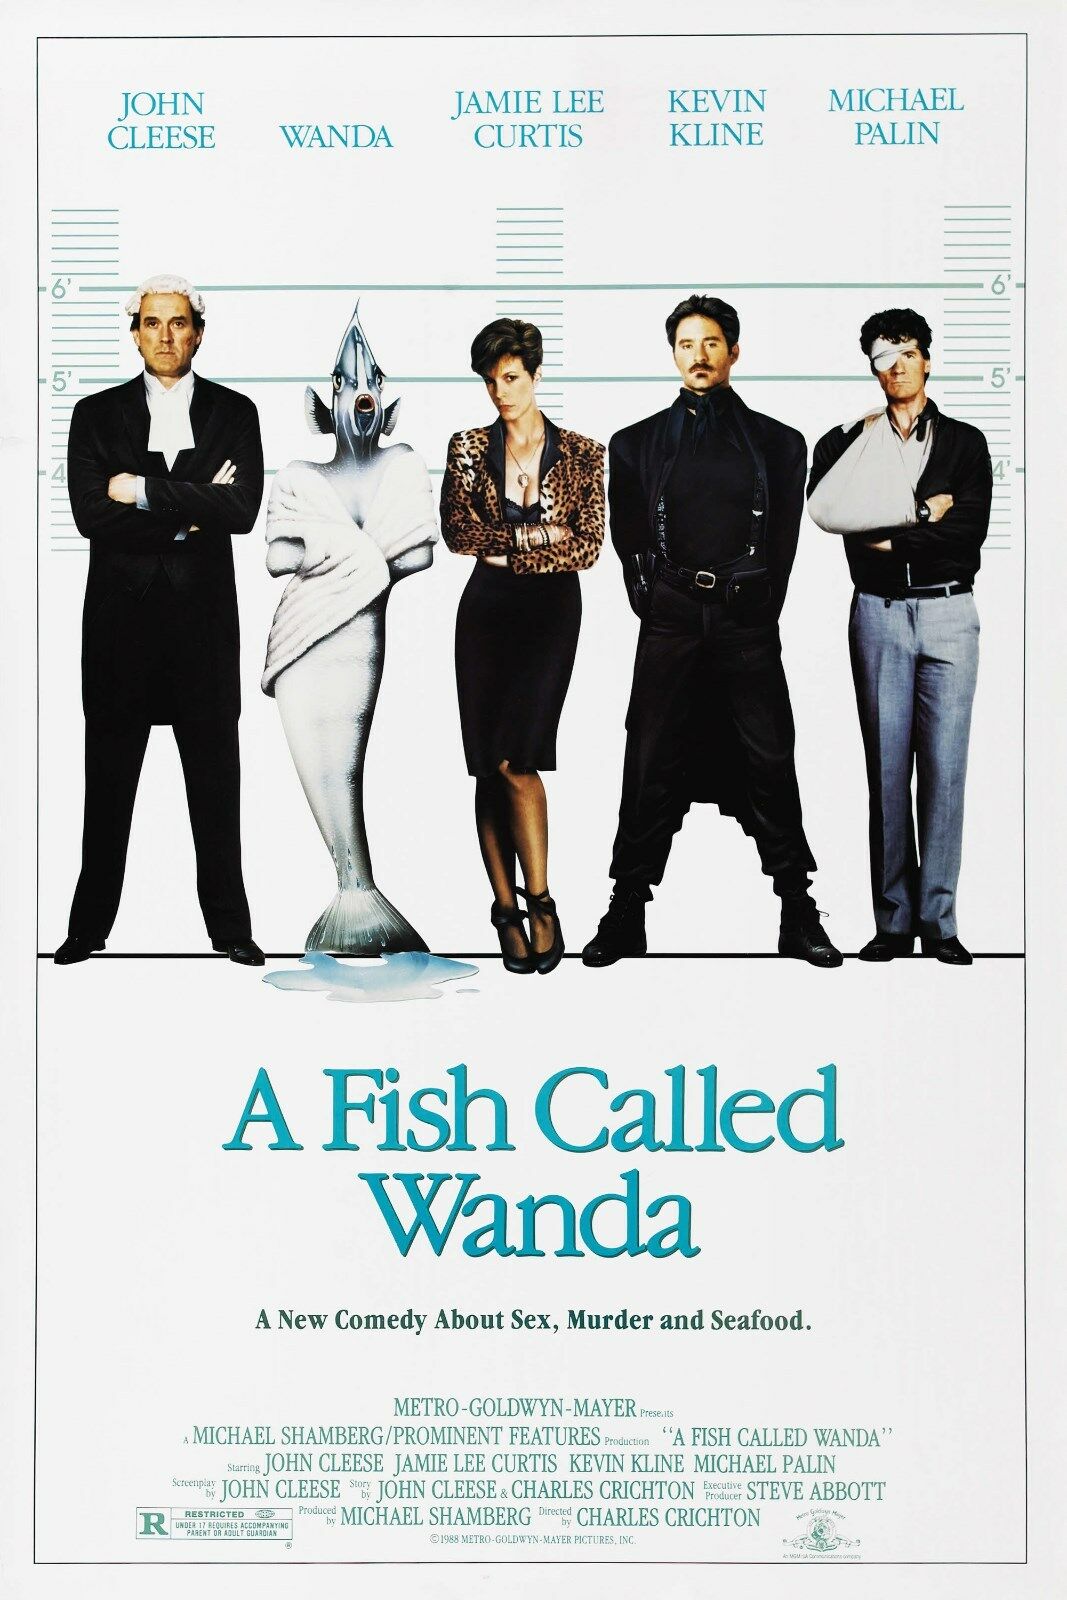 Film Club presents "Fish Called Wanda"